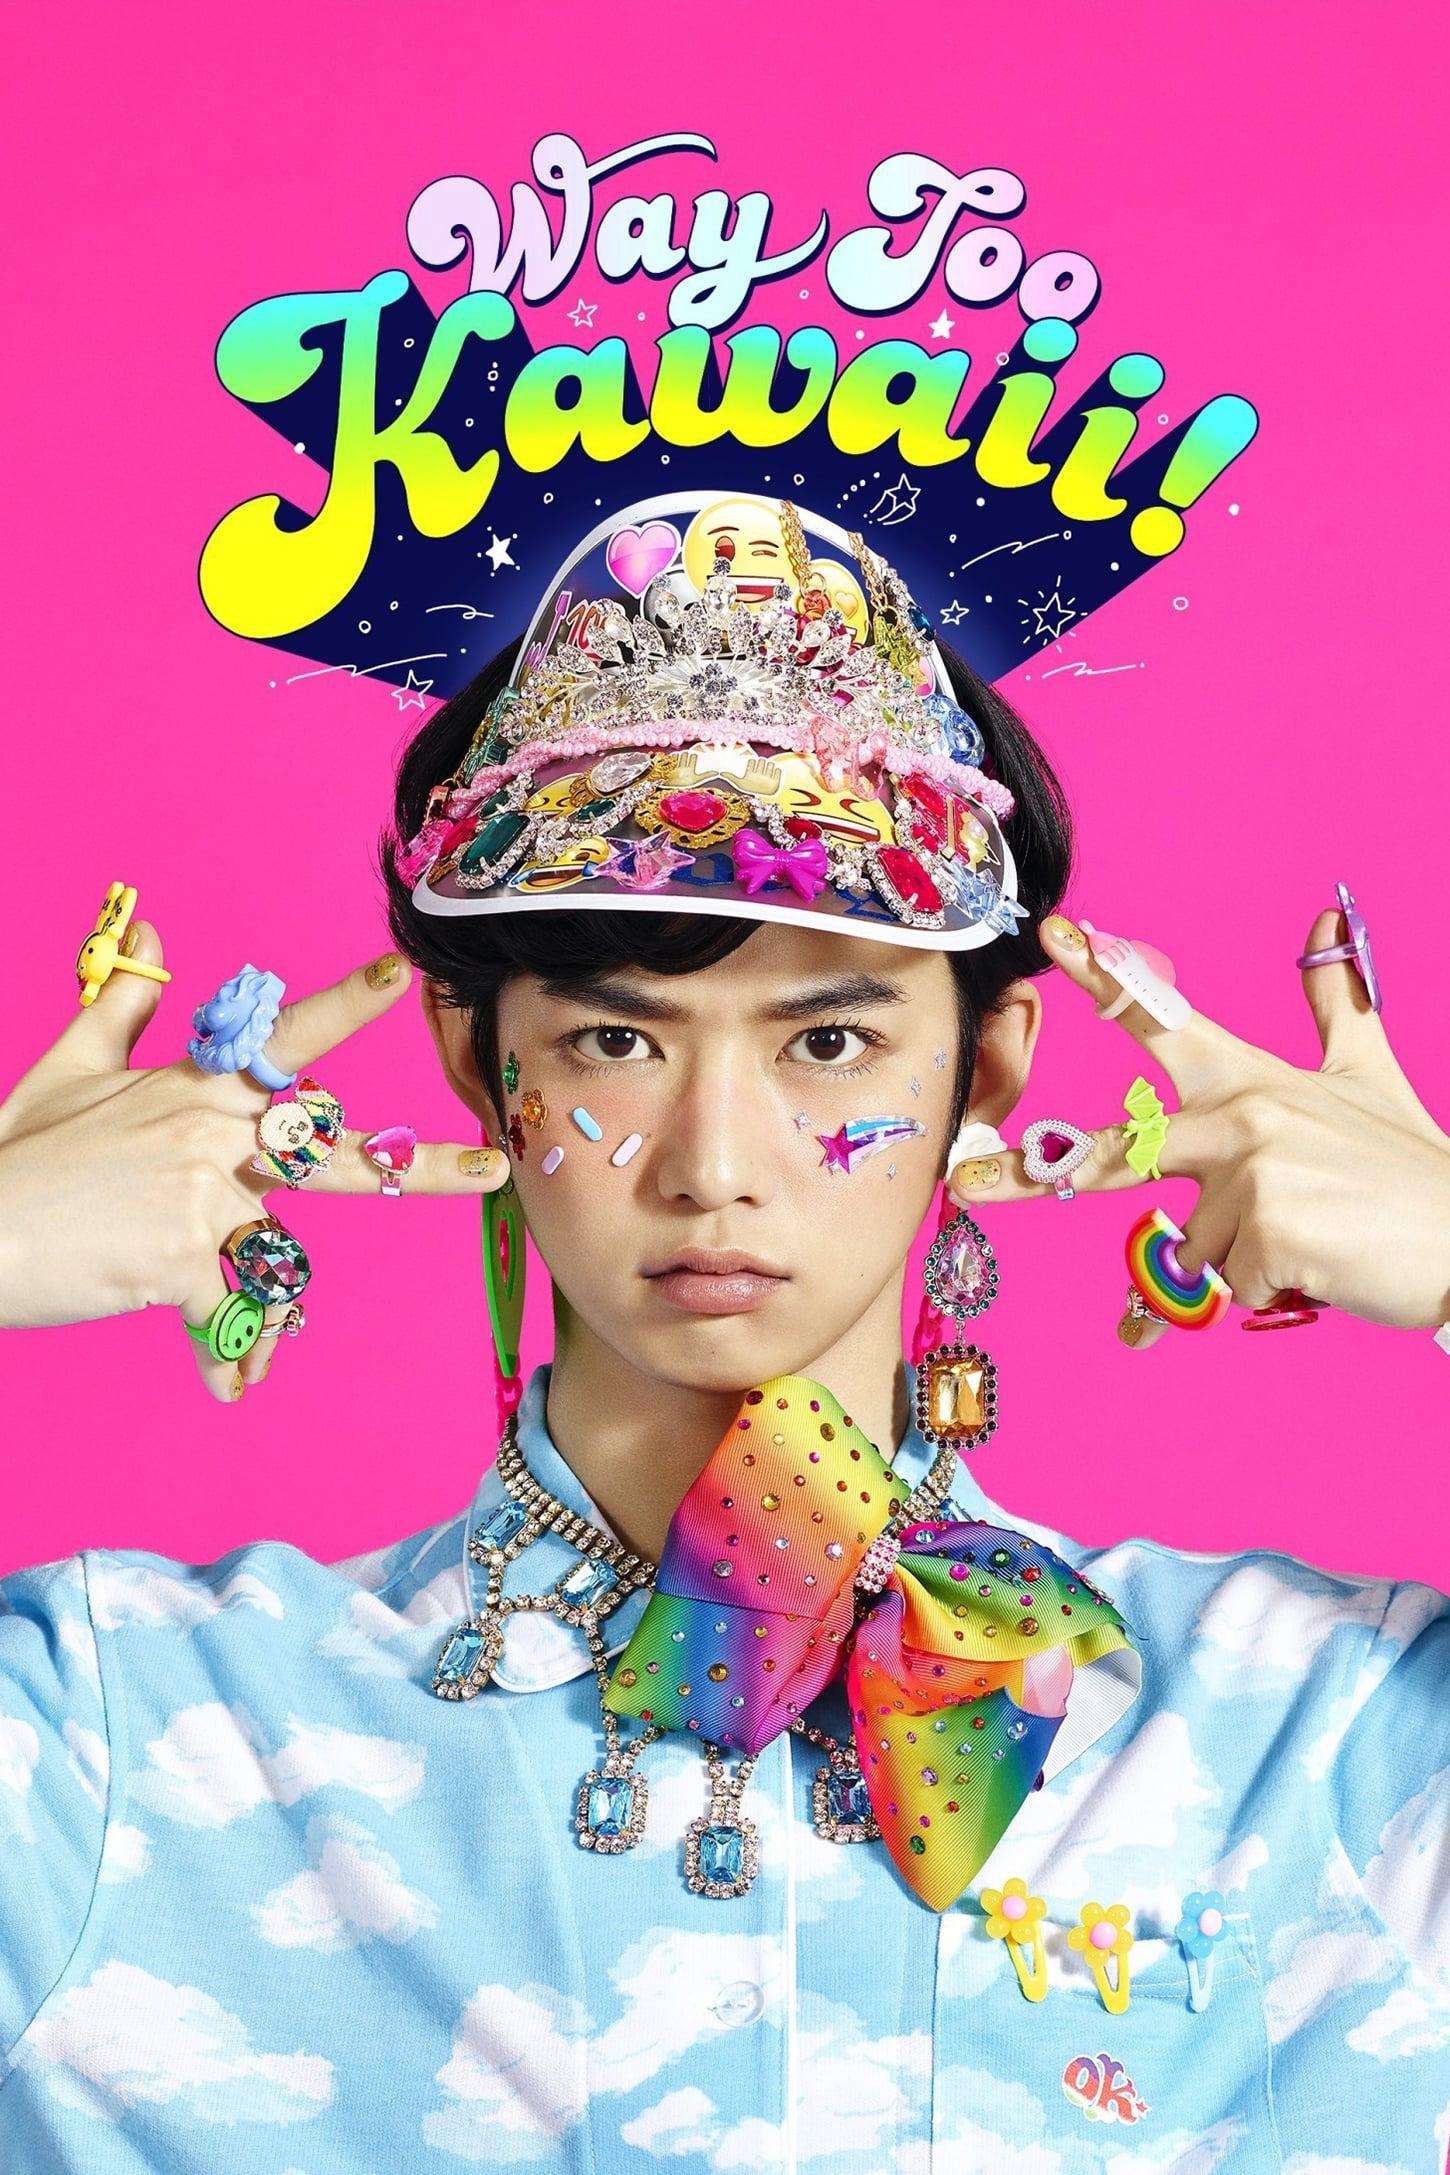 Way Too Kawaii! poster